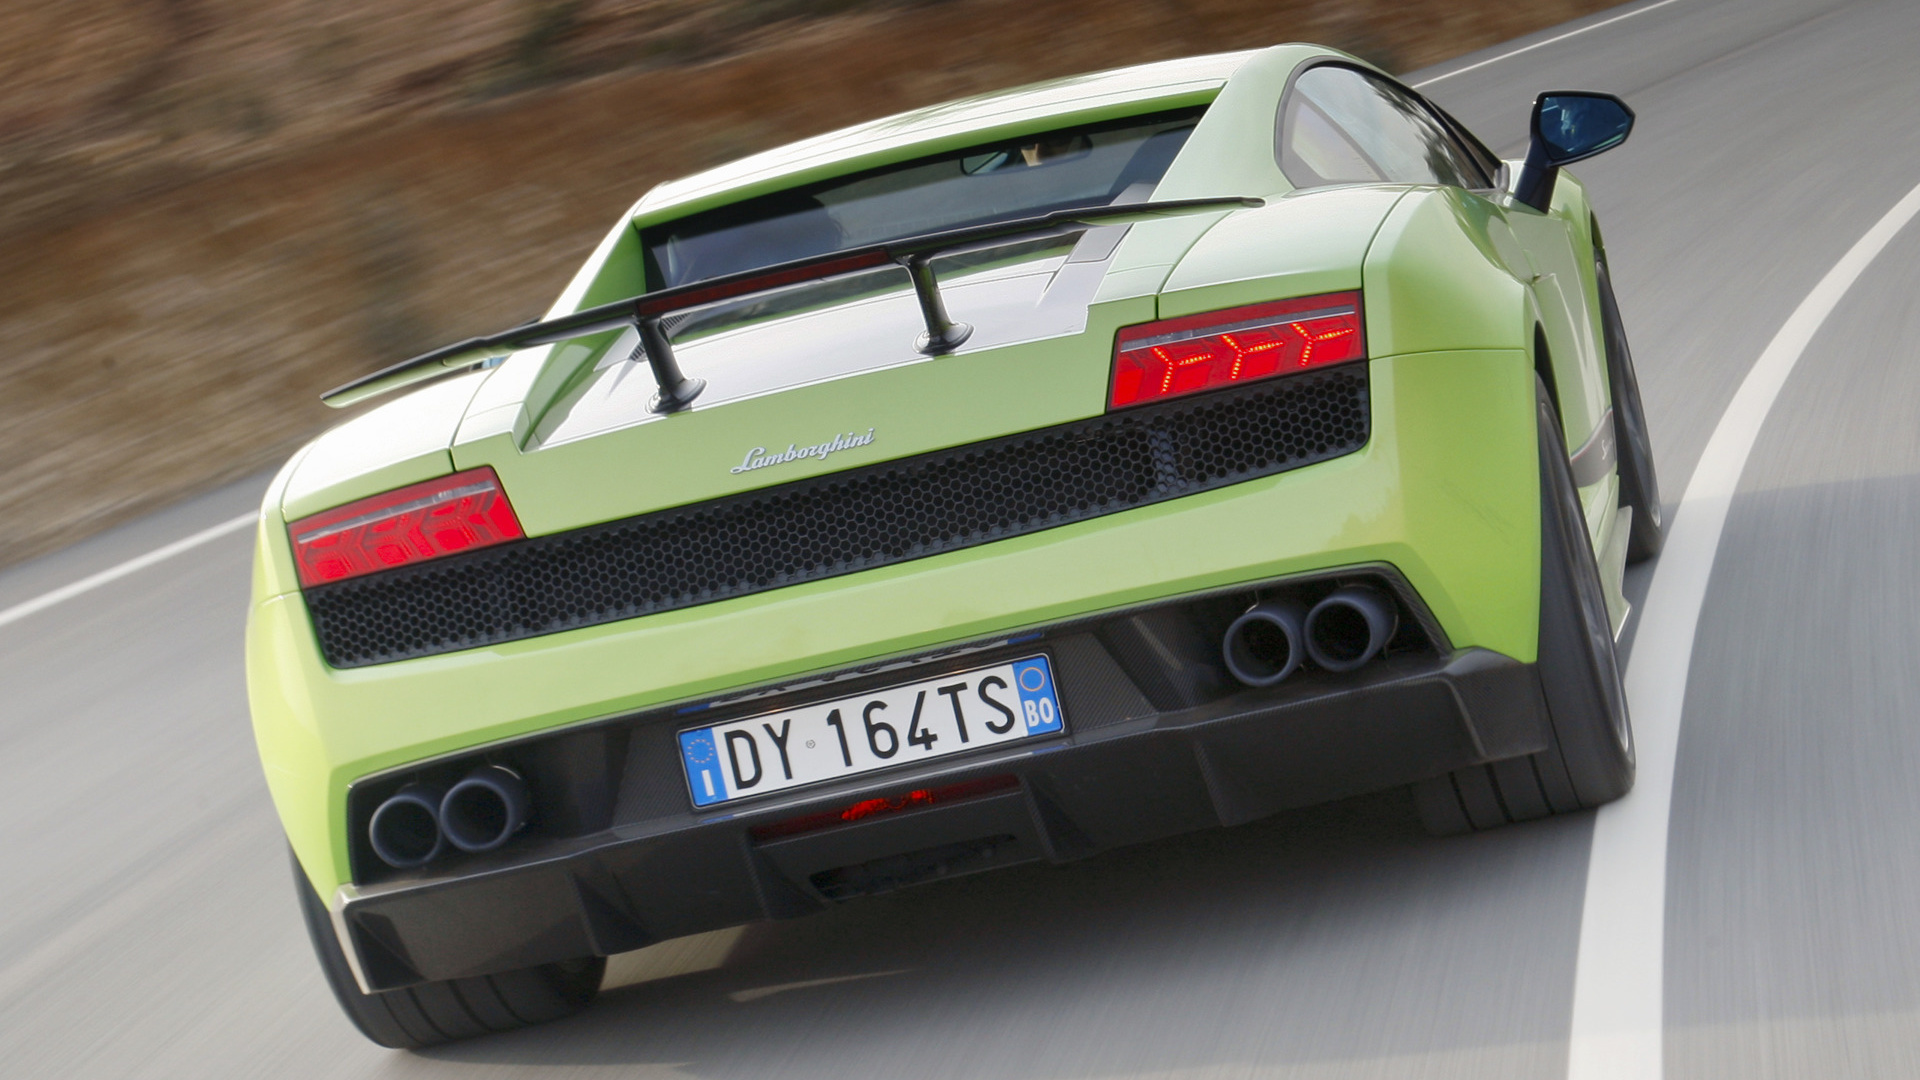 2010 Lamborghini Gallardo Lp 570 4 Superleggera Wallpapers And Hd Images Car Pixel 4459